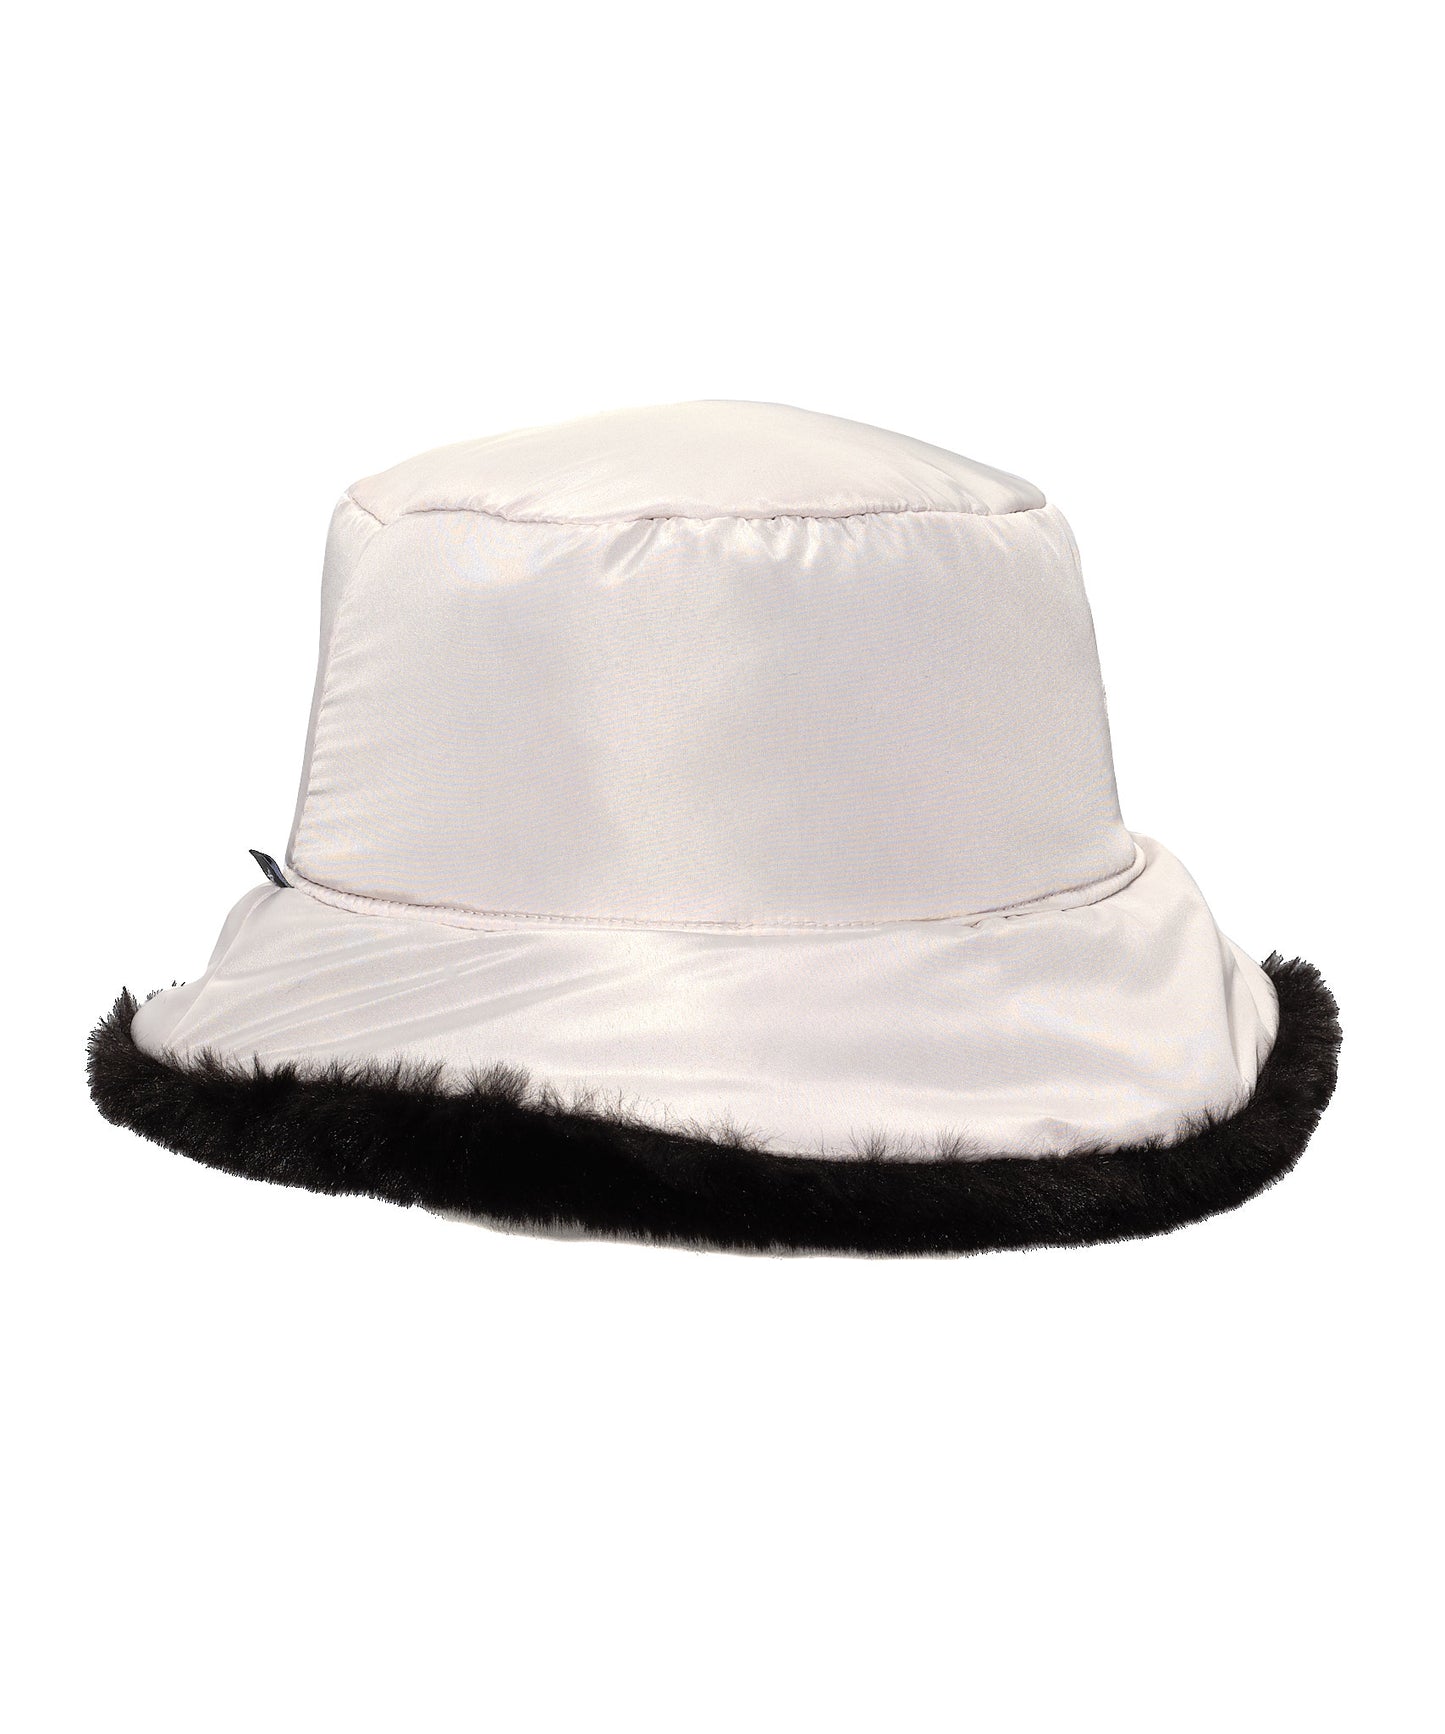 Reversible Bucket Hat in color Cream/Black